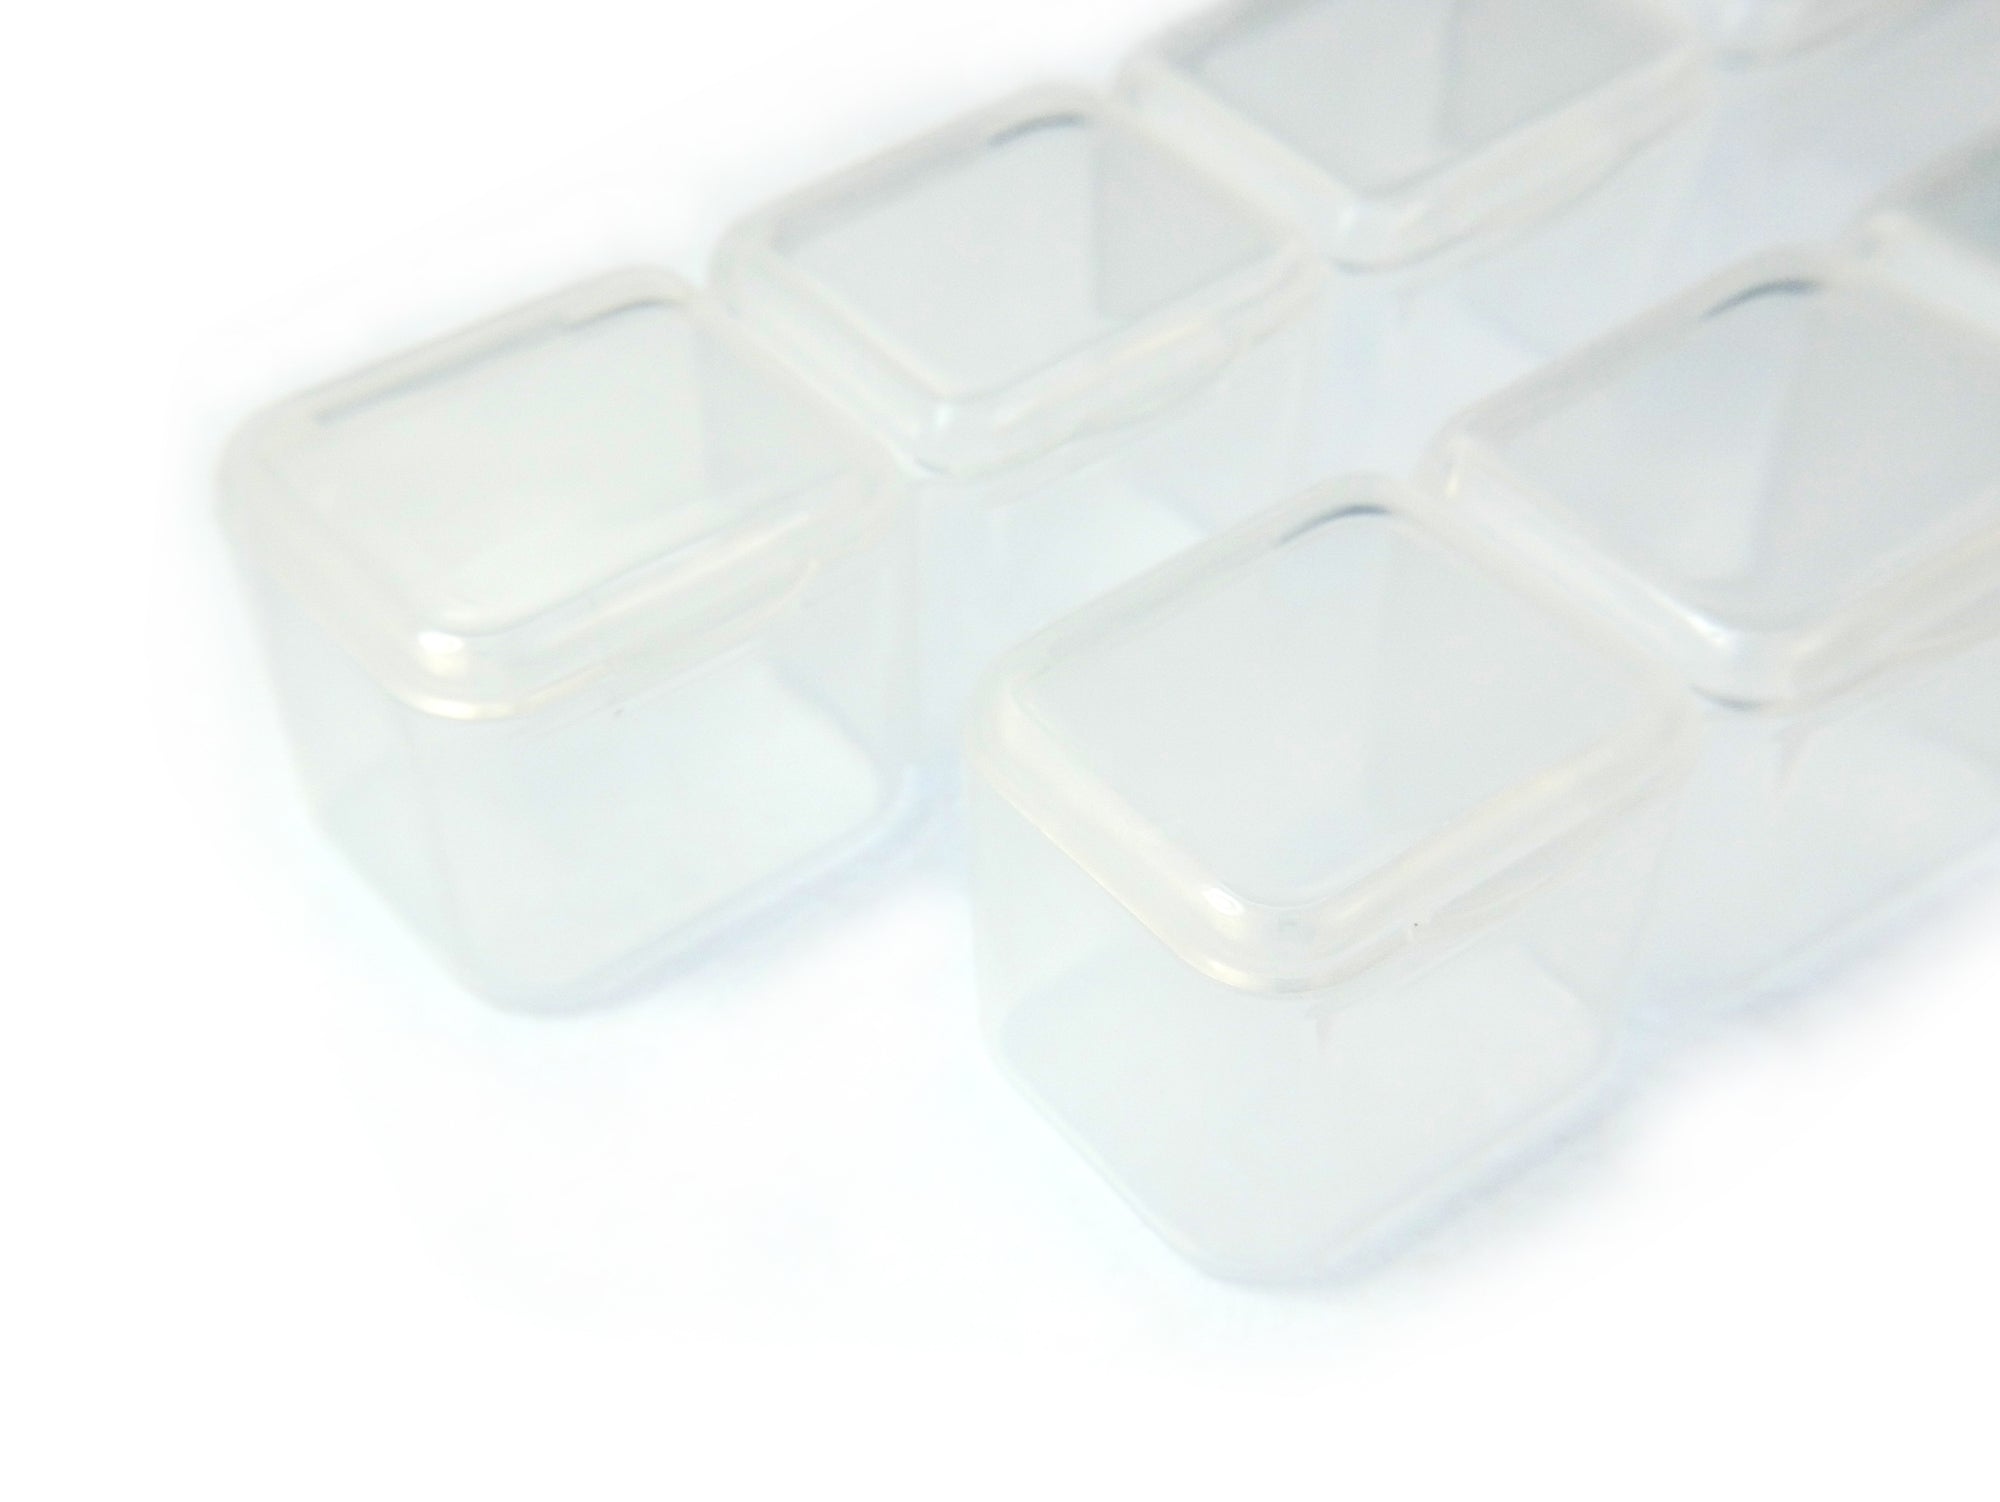 Bead Storage Box - 28 Individual Compartments - BeadOnIt Boards